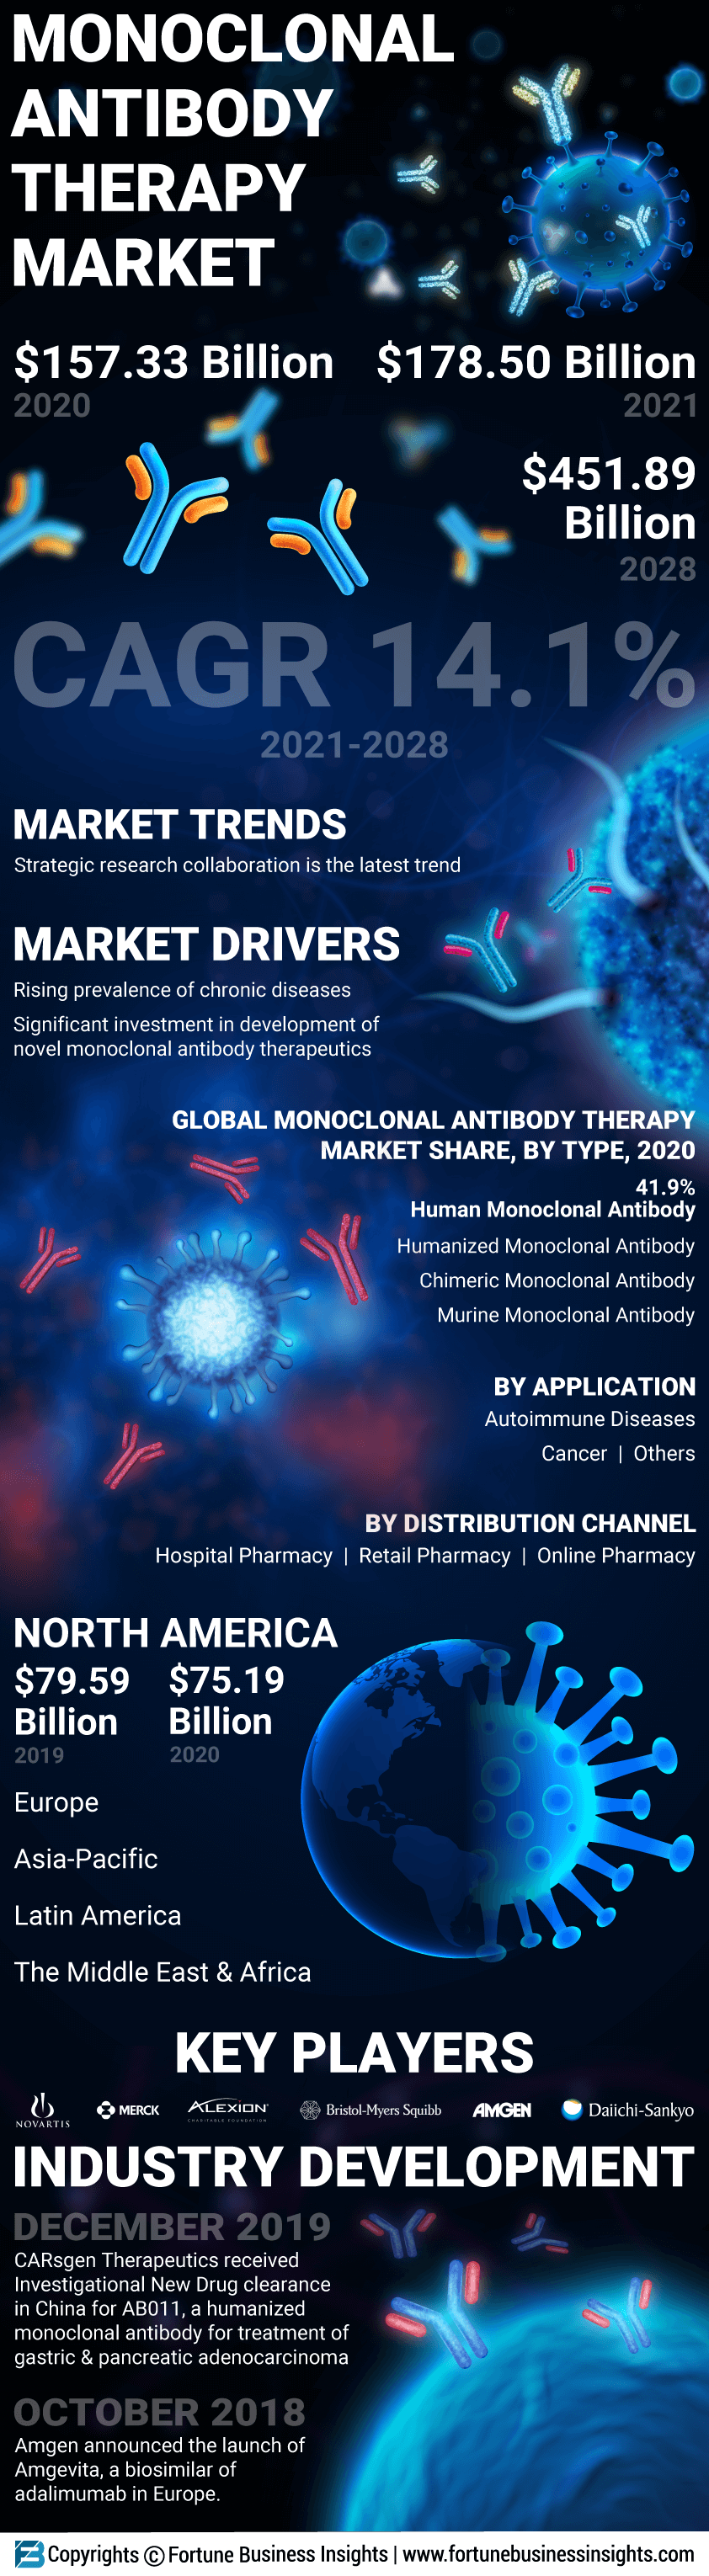 Monoclonal Antibody Therapy Market